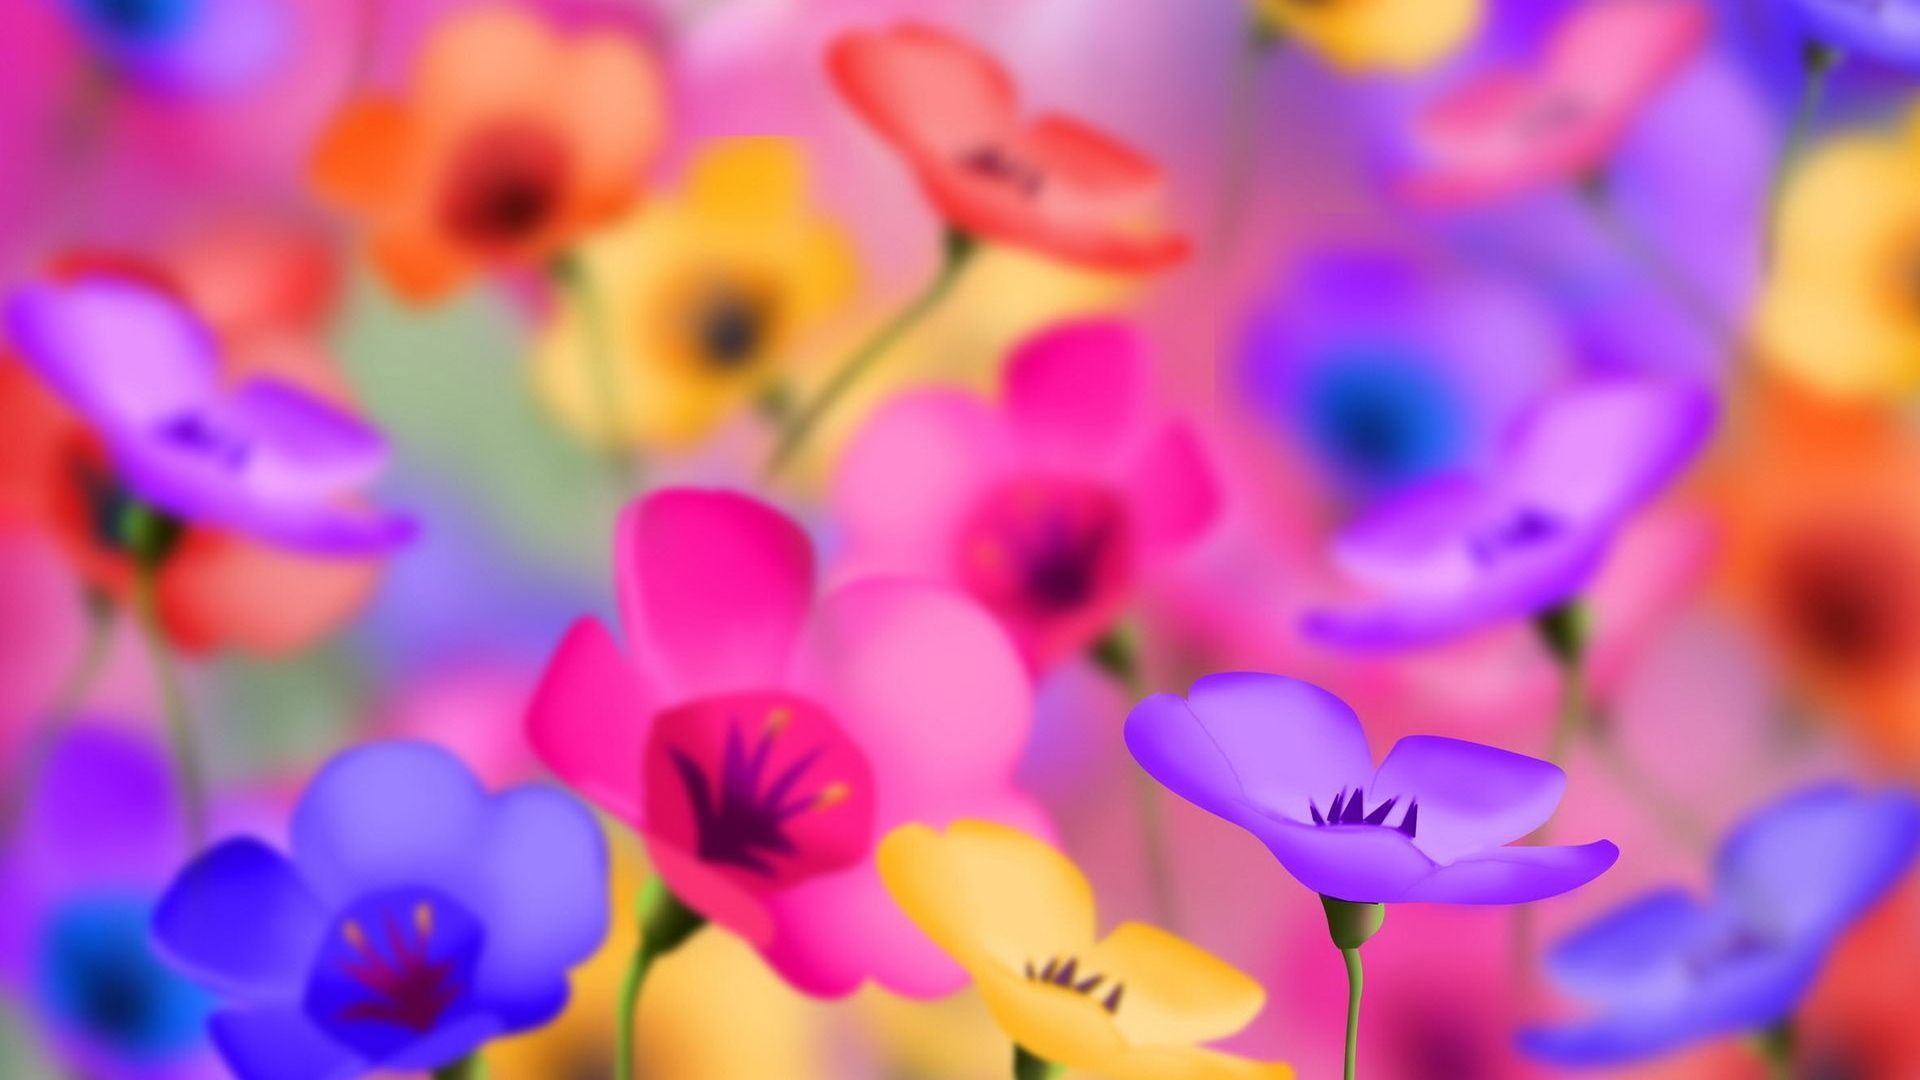 Full HD 1080p Flowers Wallpapers, Desktop Backgrounds HD Downloads